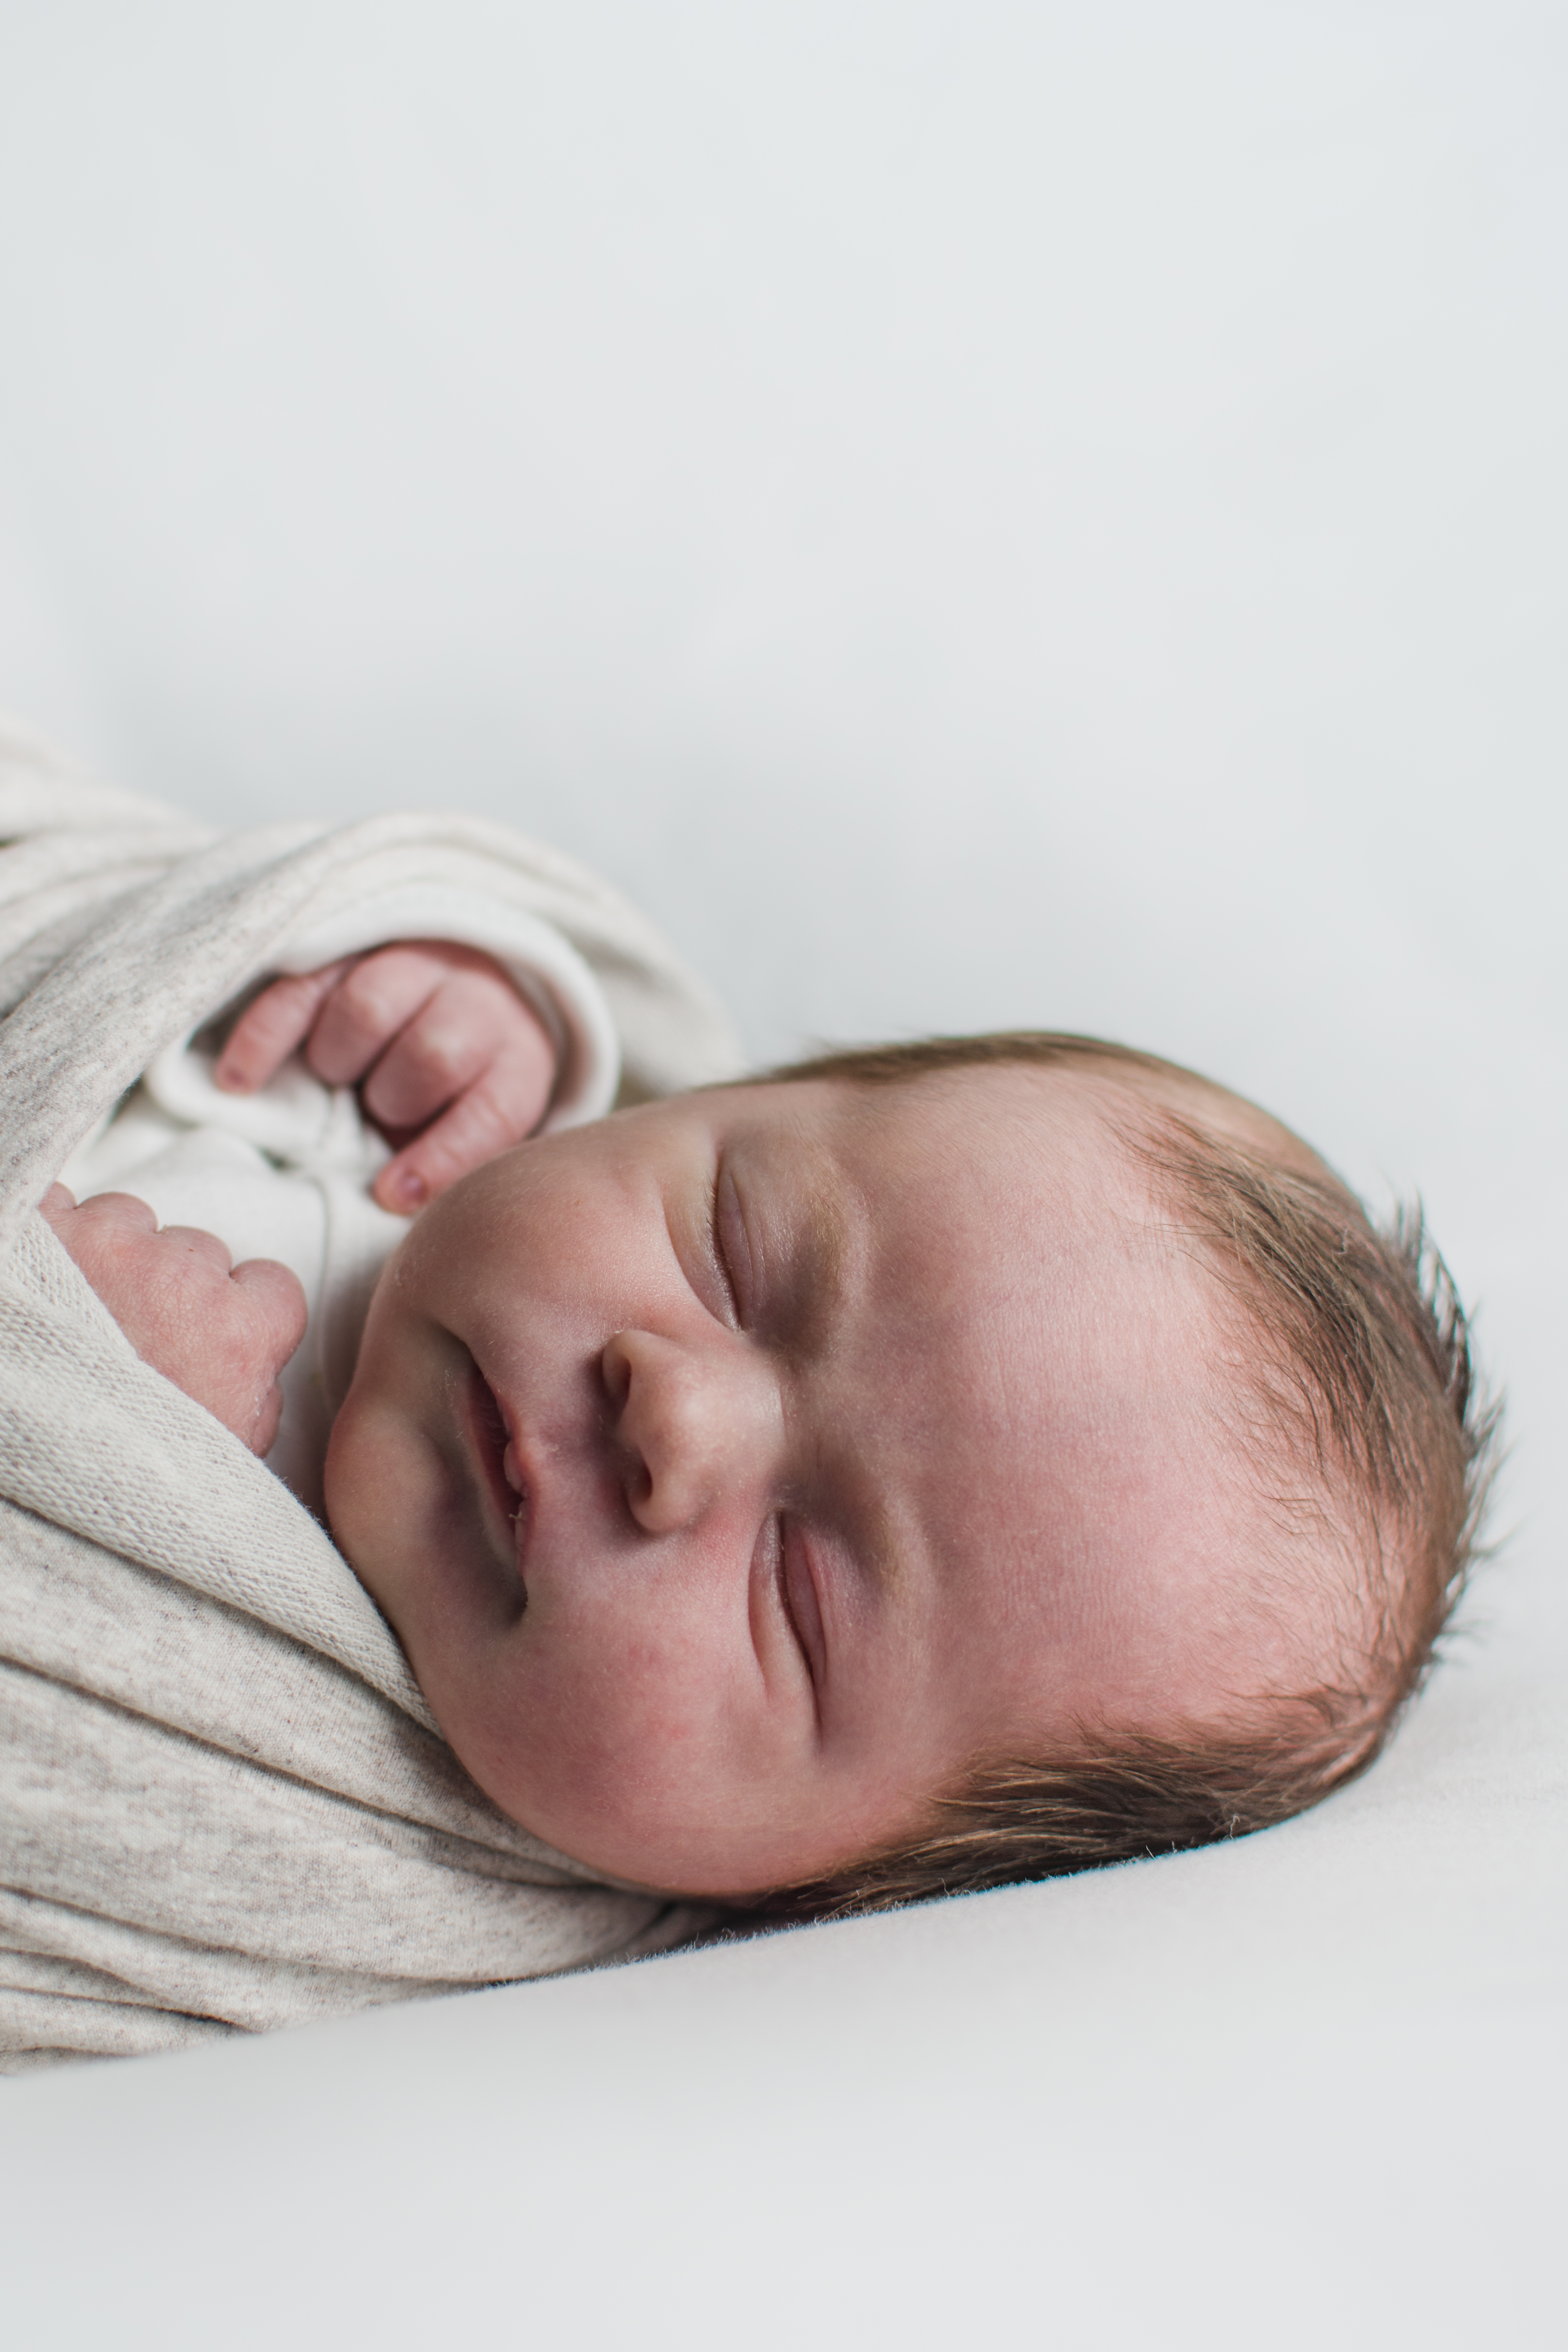 Frania fotografie Turnhout Kempen Antwerpen Fotograaf newborn baby